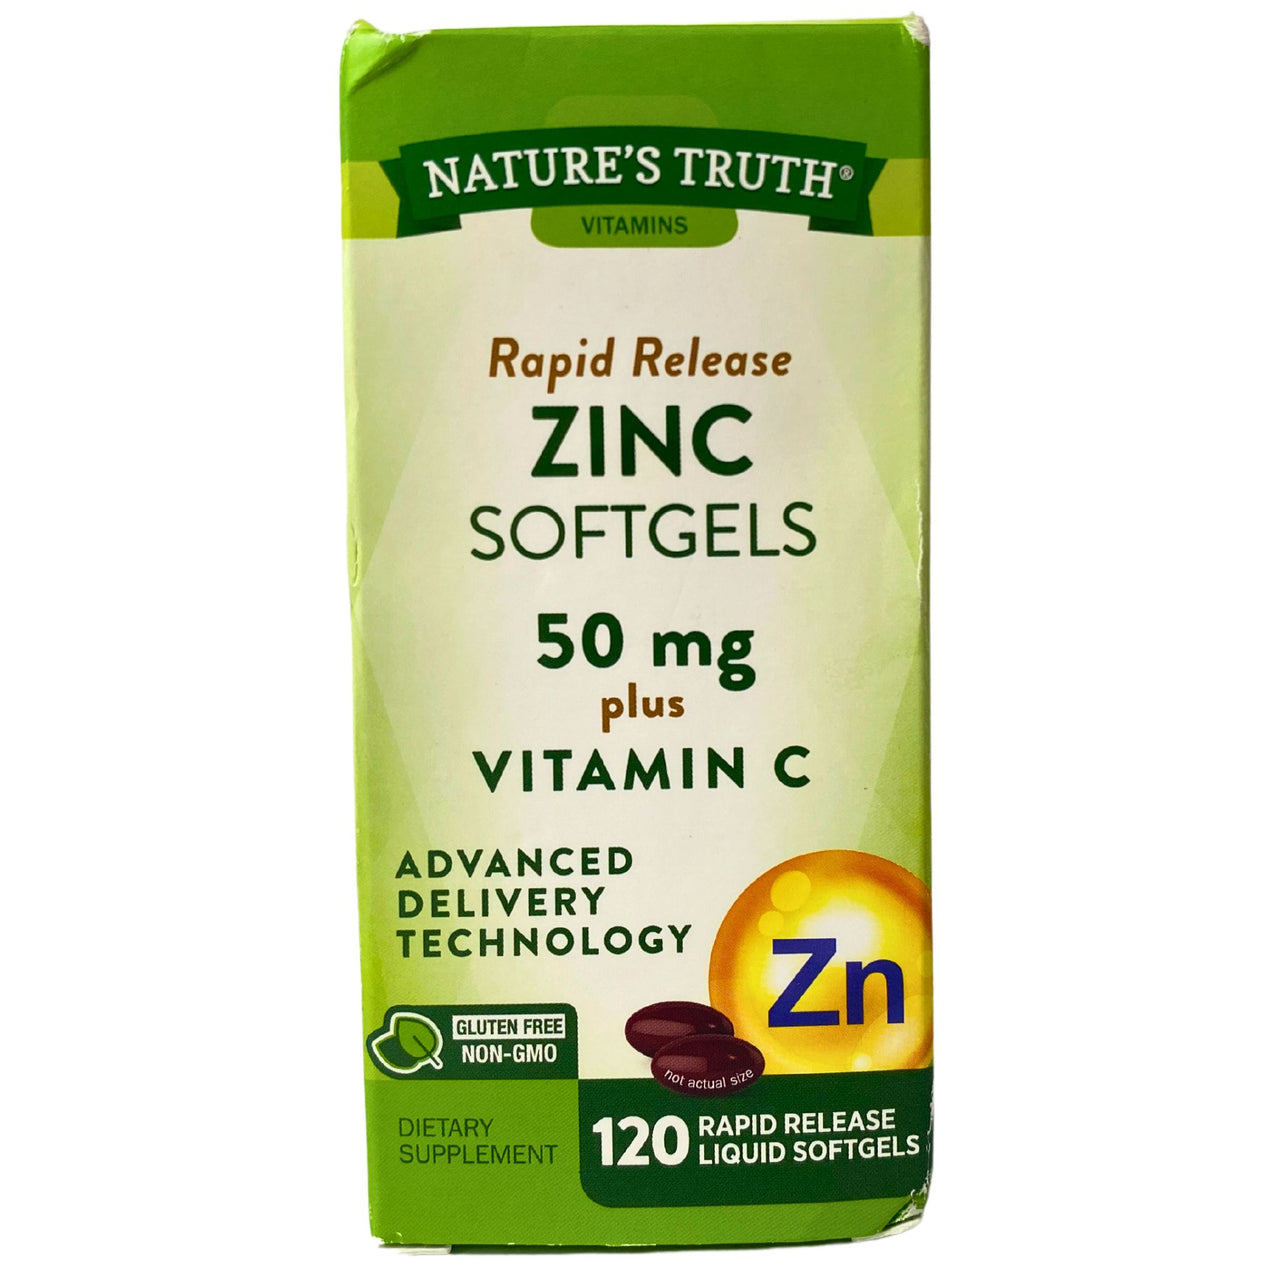 Nature's Truth Vitamins Rapid Release Zinc Softgels 50mg plus Vitamin C